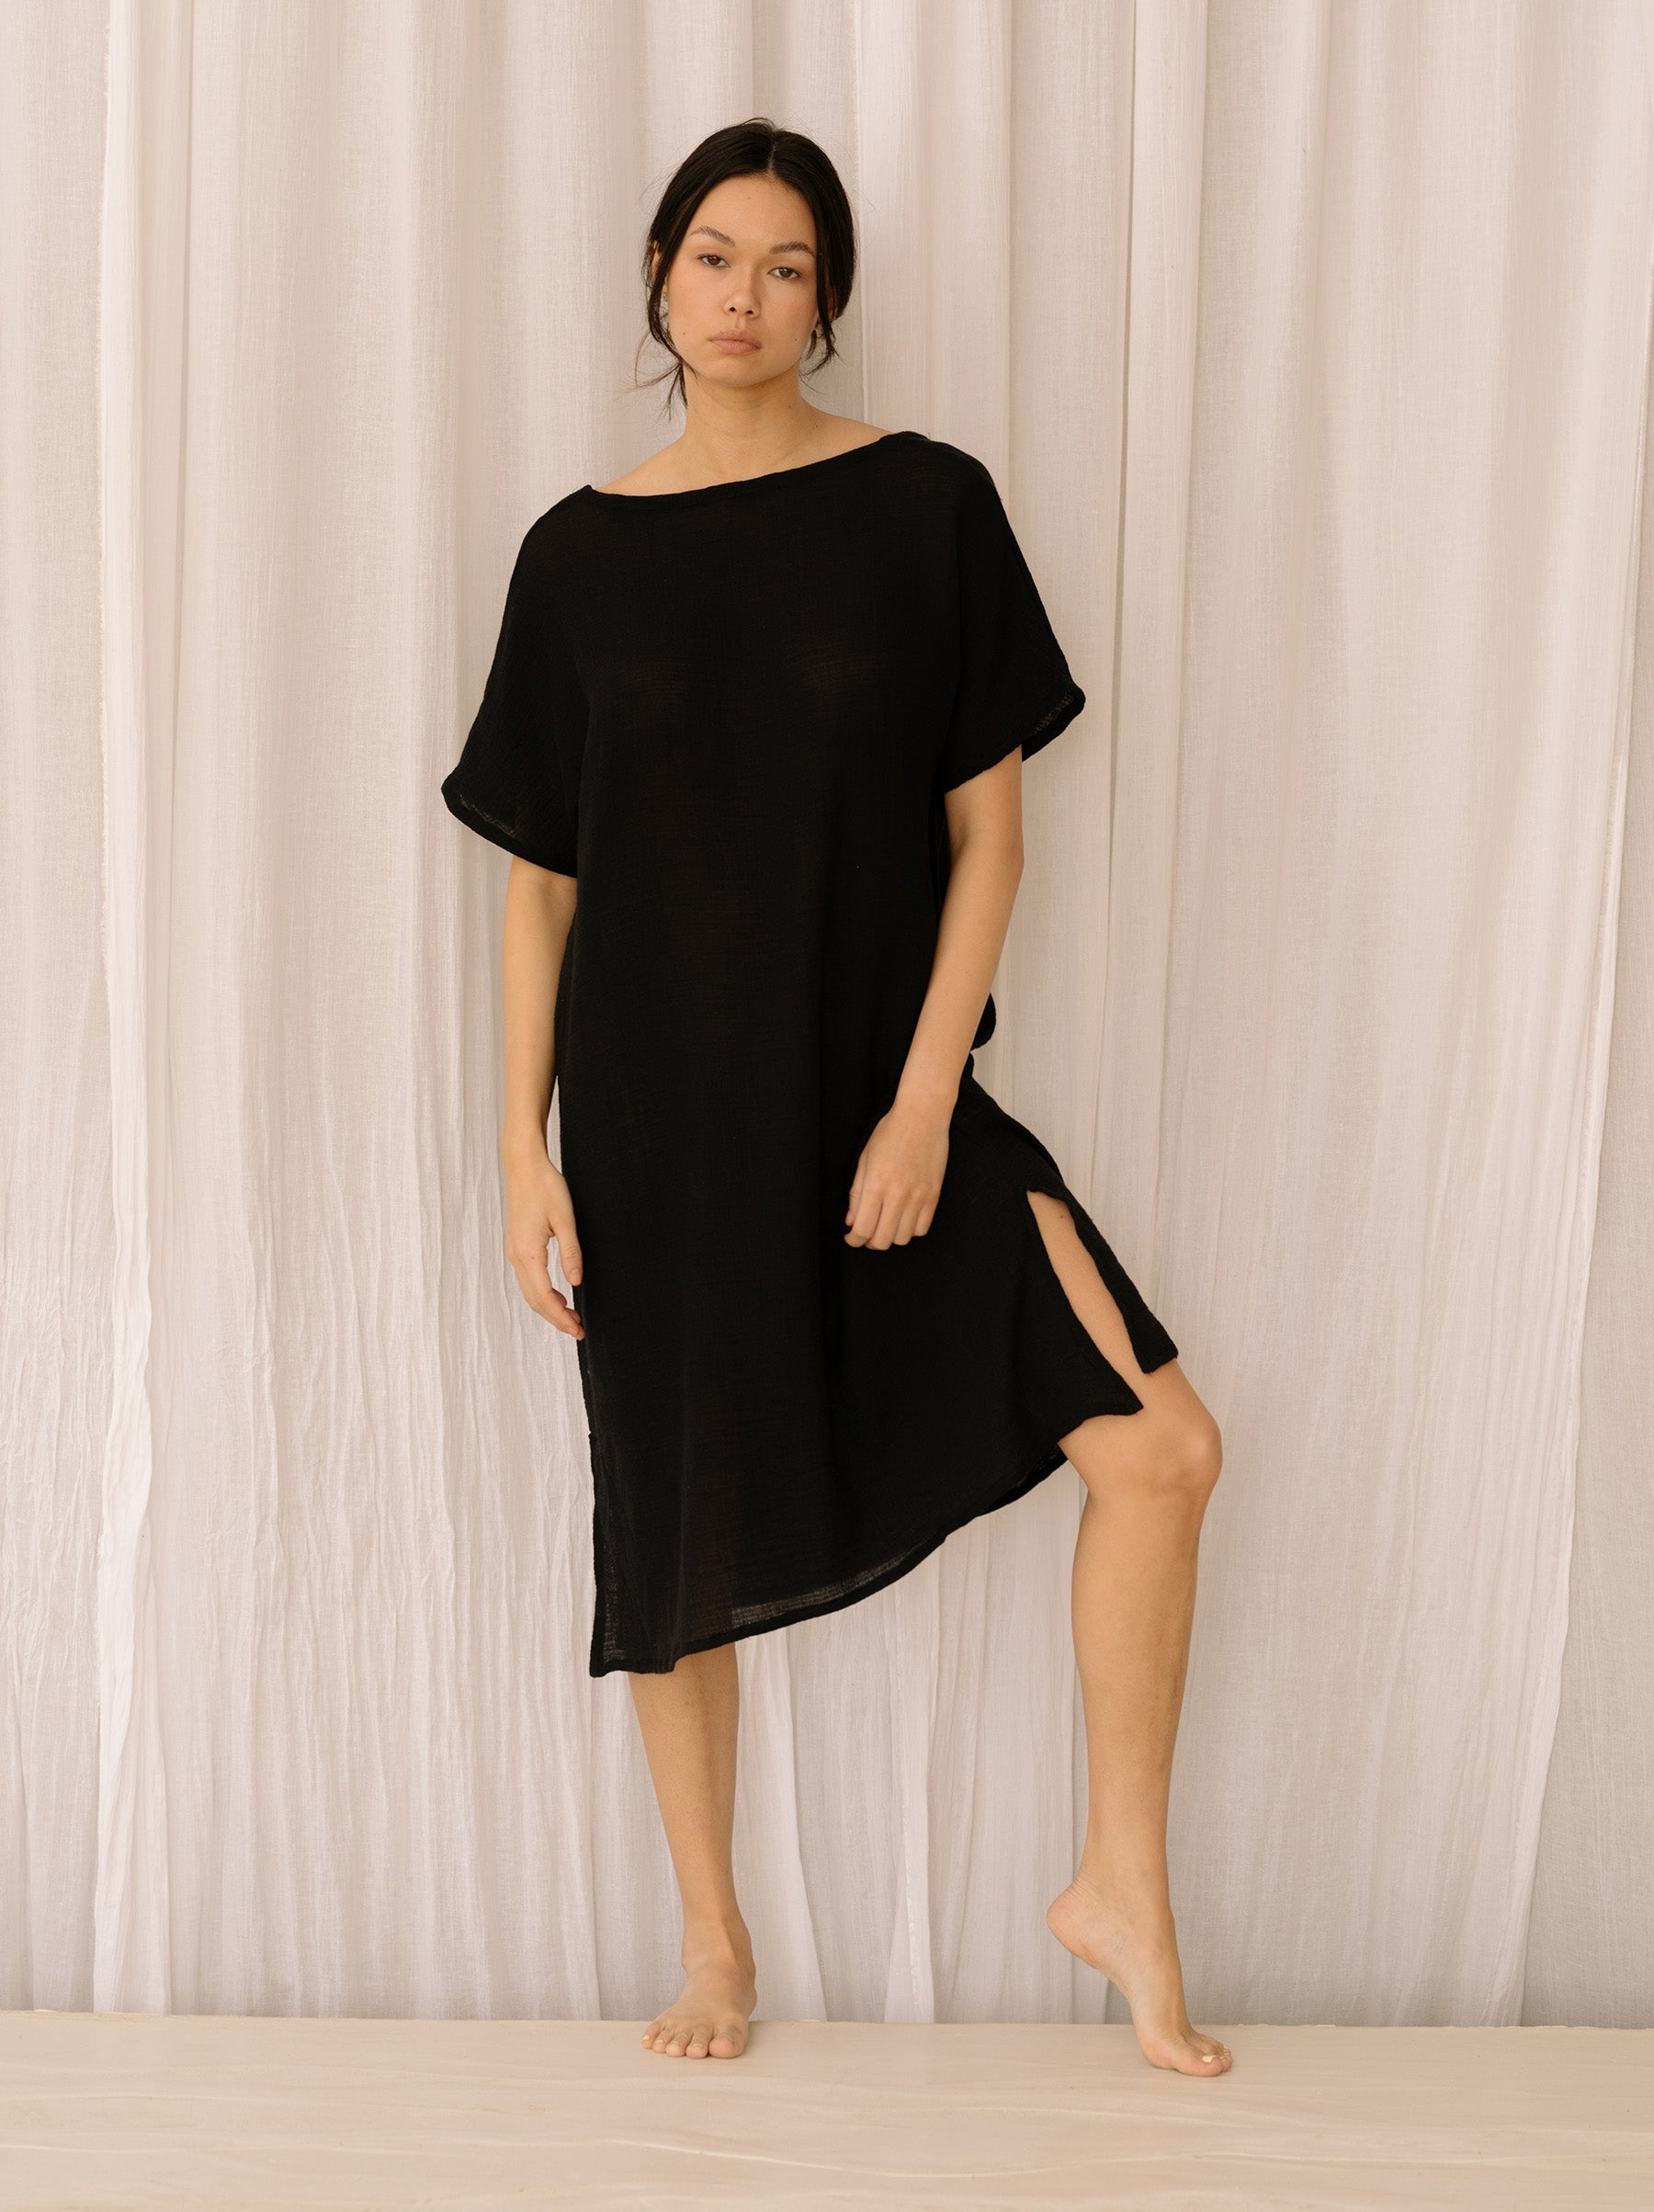 Asya black resort dress with side splits.